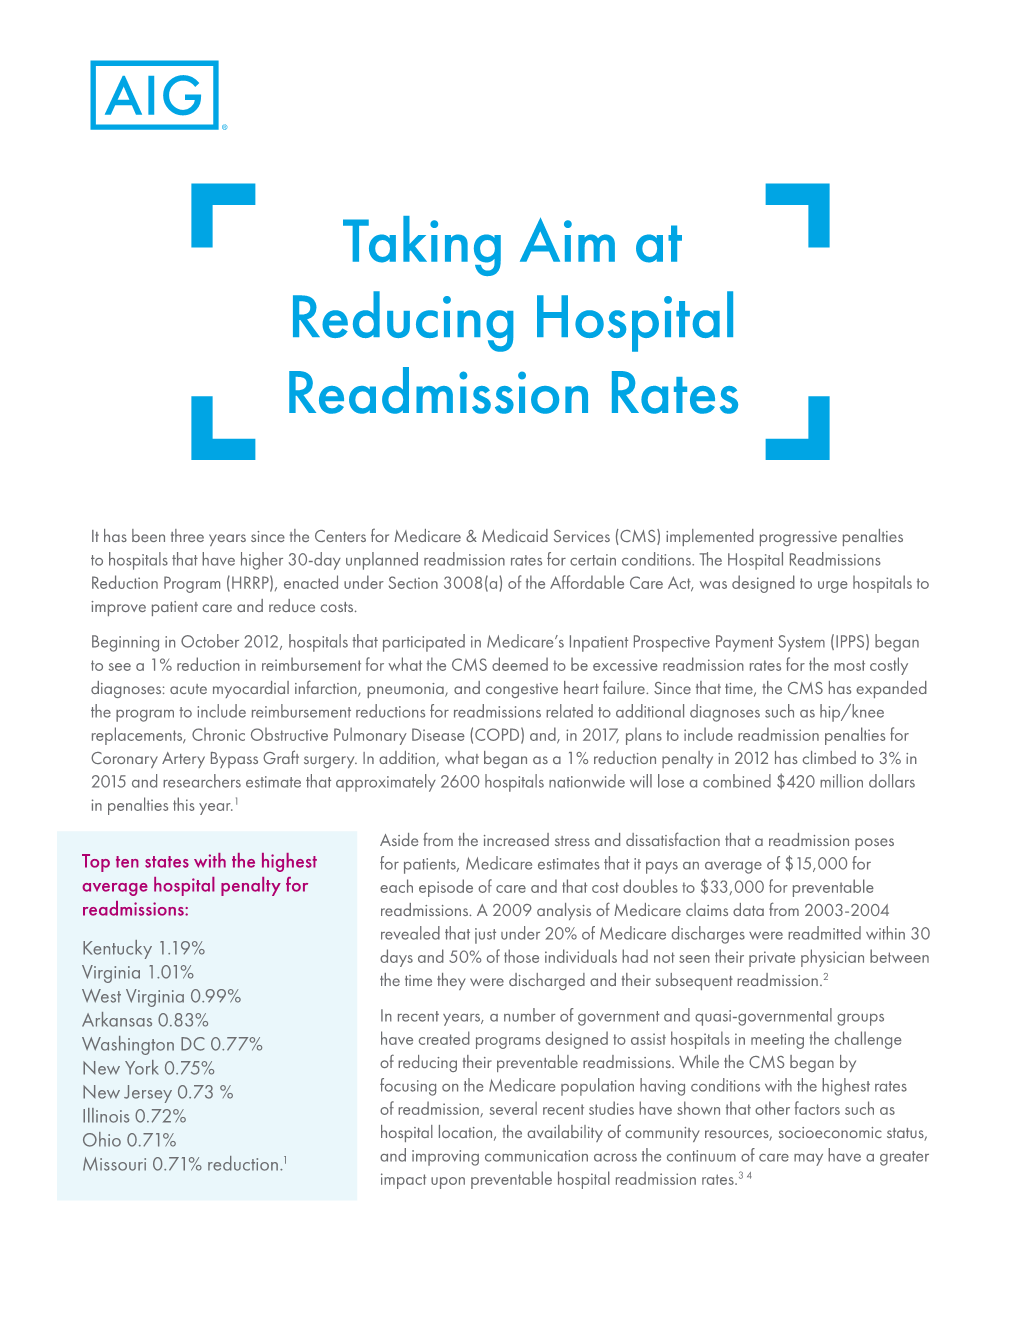 Taking Aim at Reducing Hospital Readmission Rates